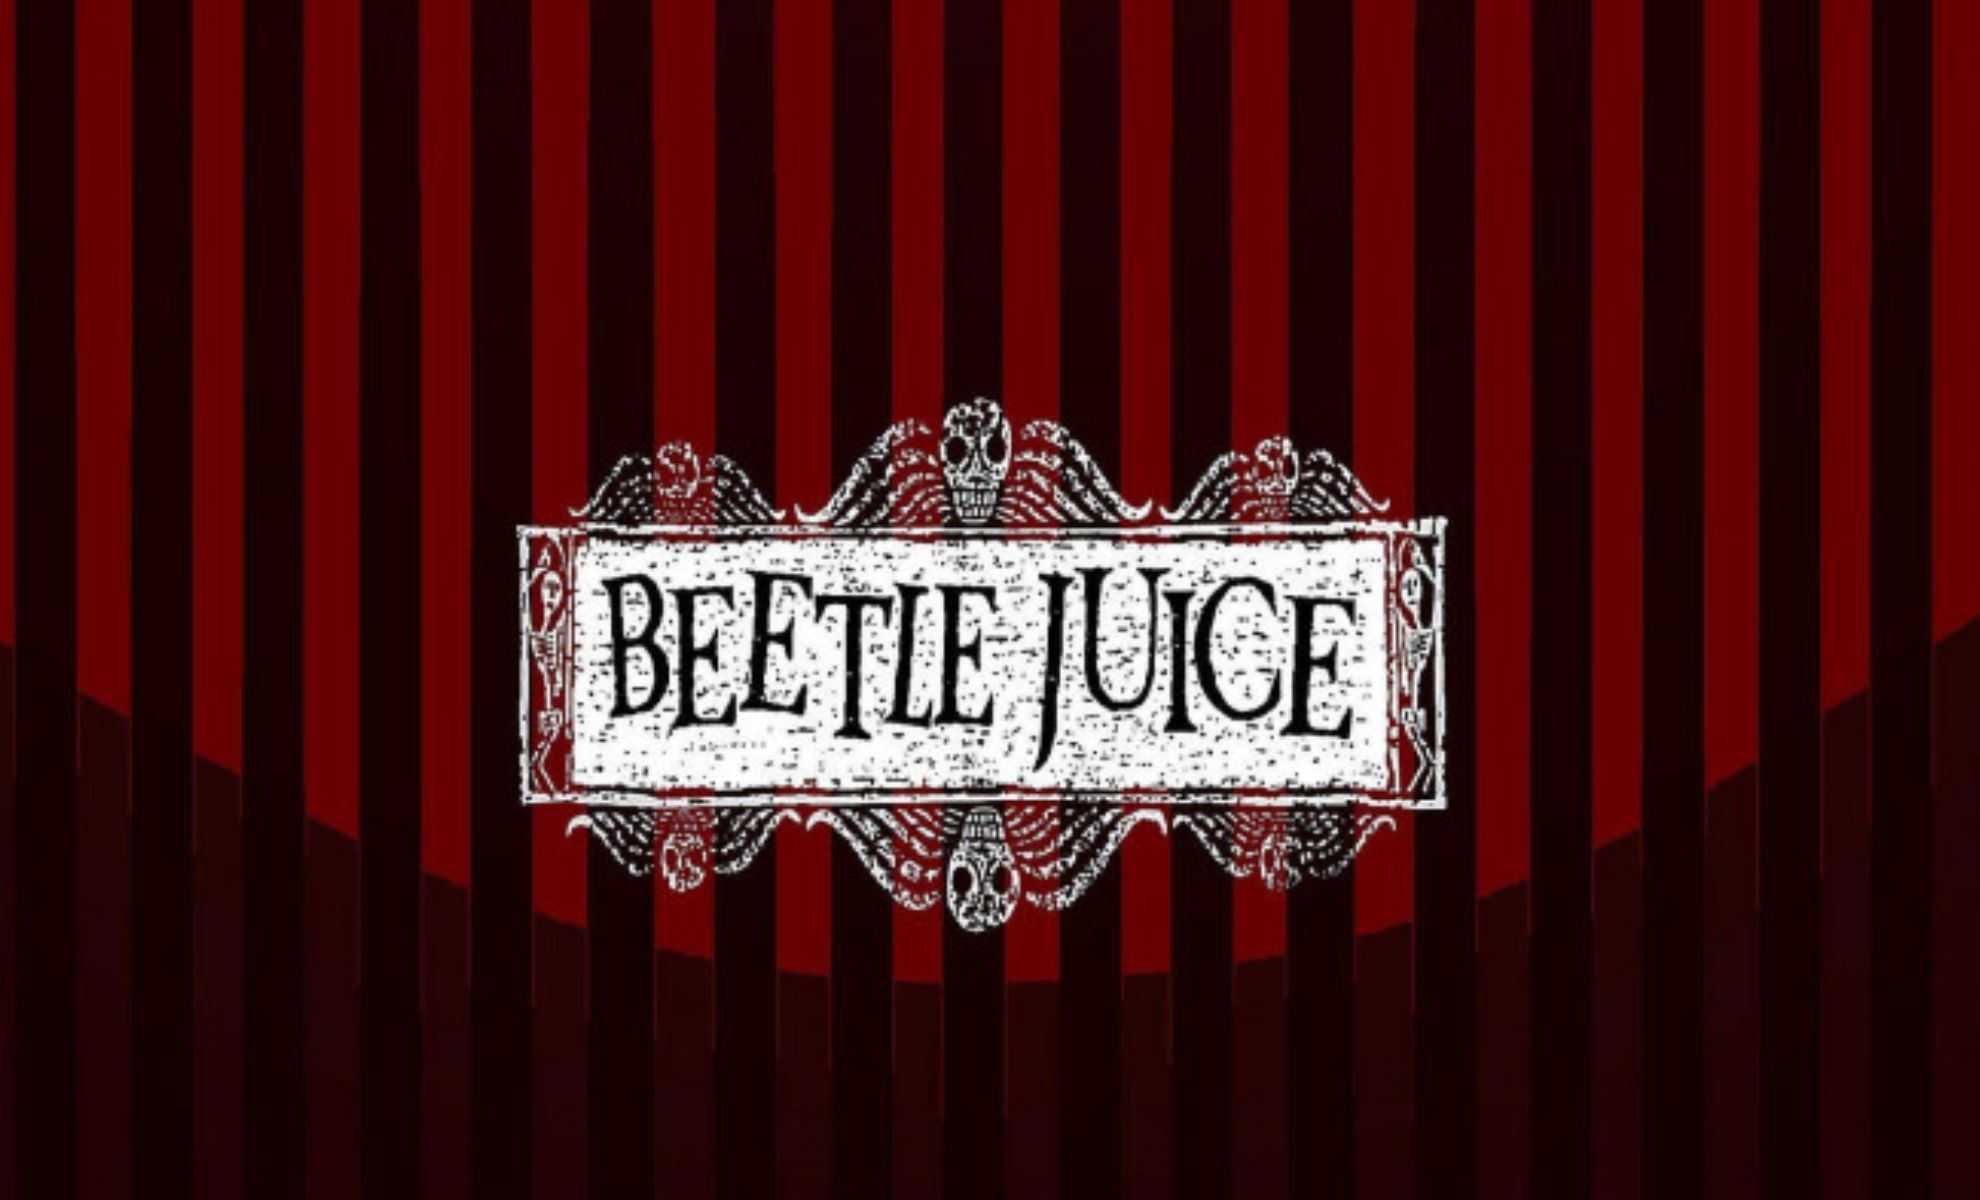 Beetlejuice 2 confirmé ! Avec Jenna Ortega en vedette